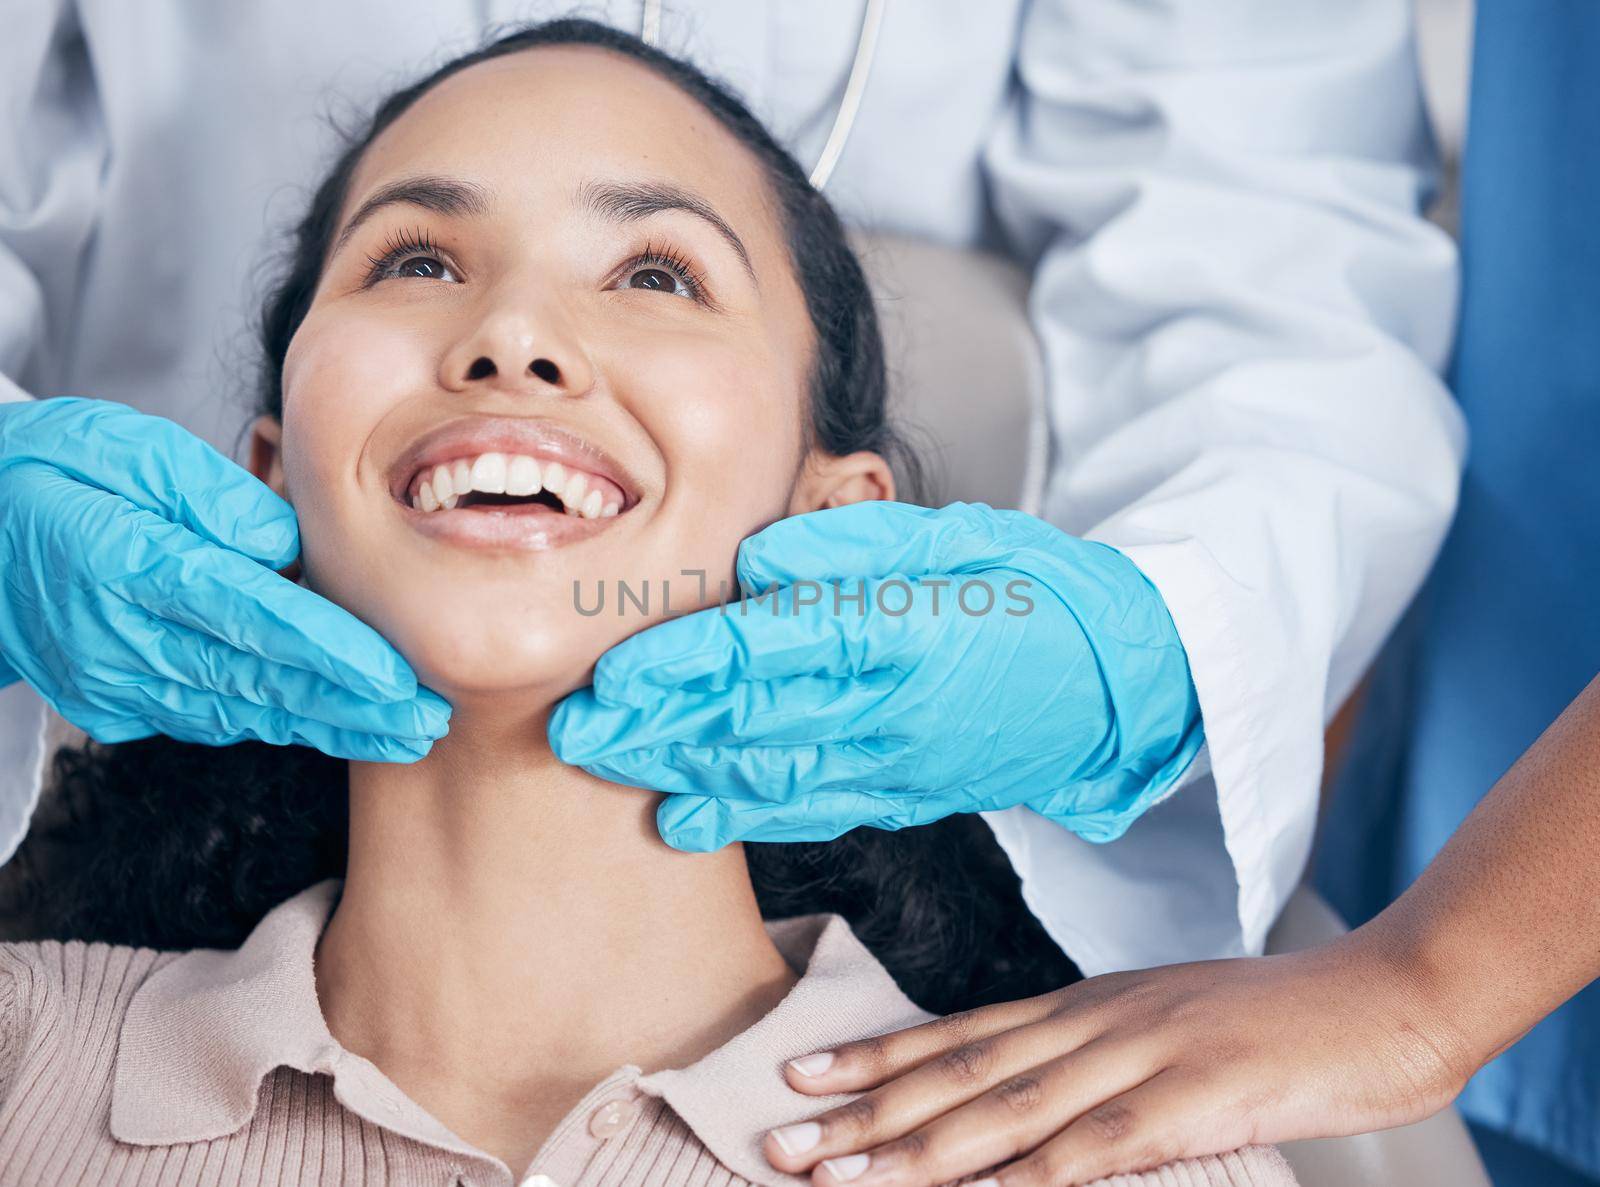 a dentist checking their handiwork after a procedure.